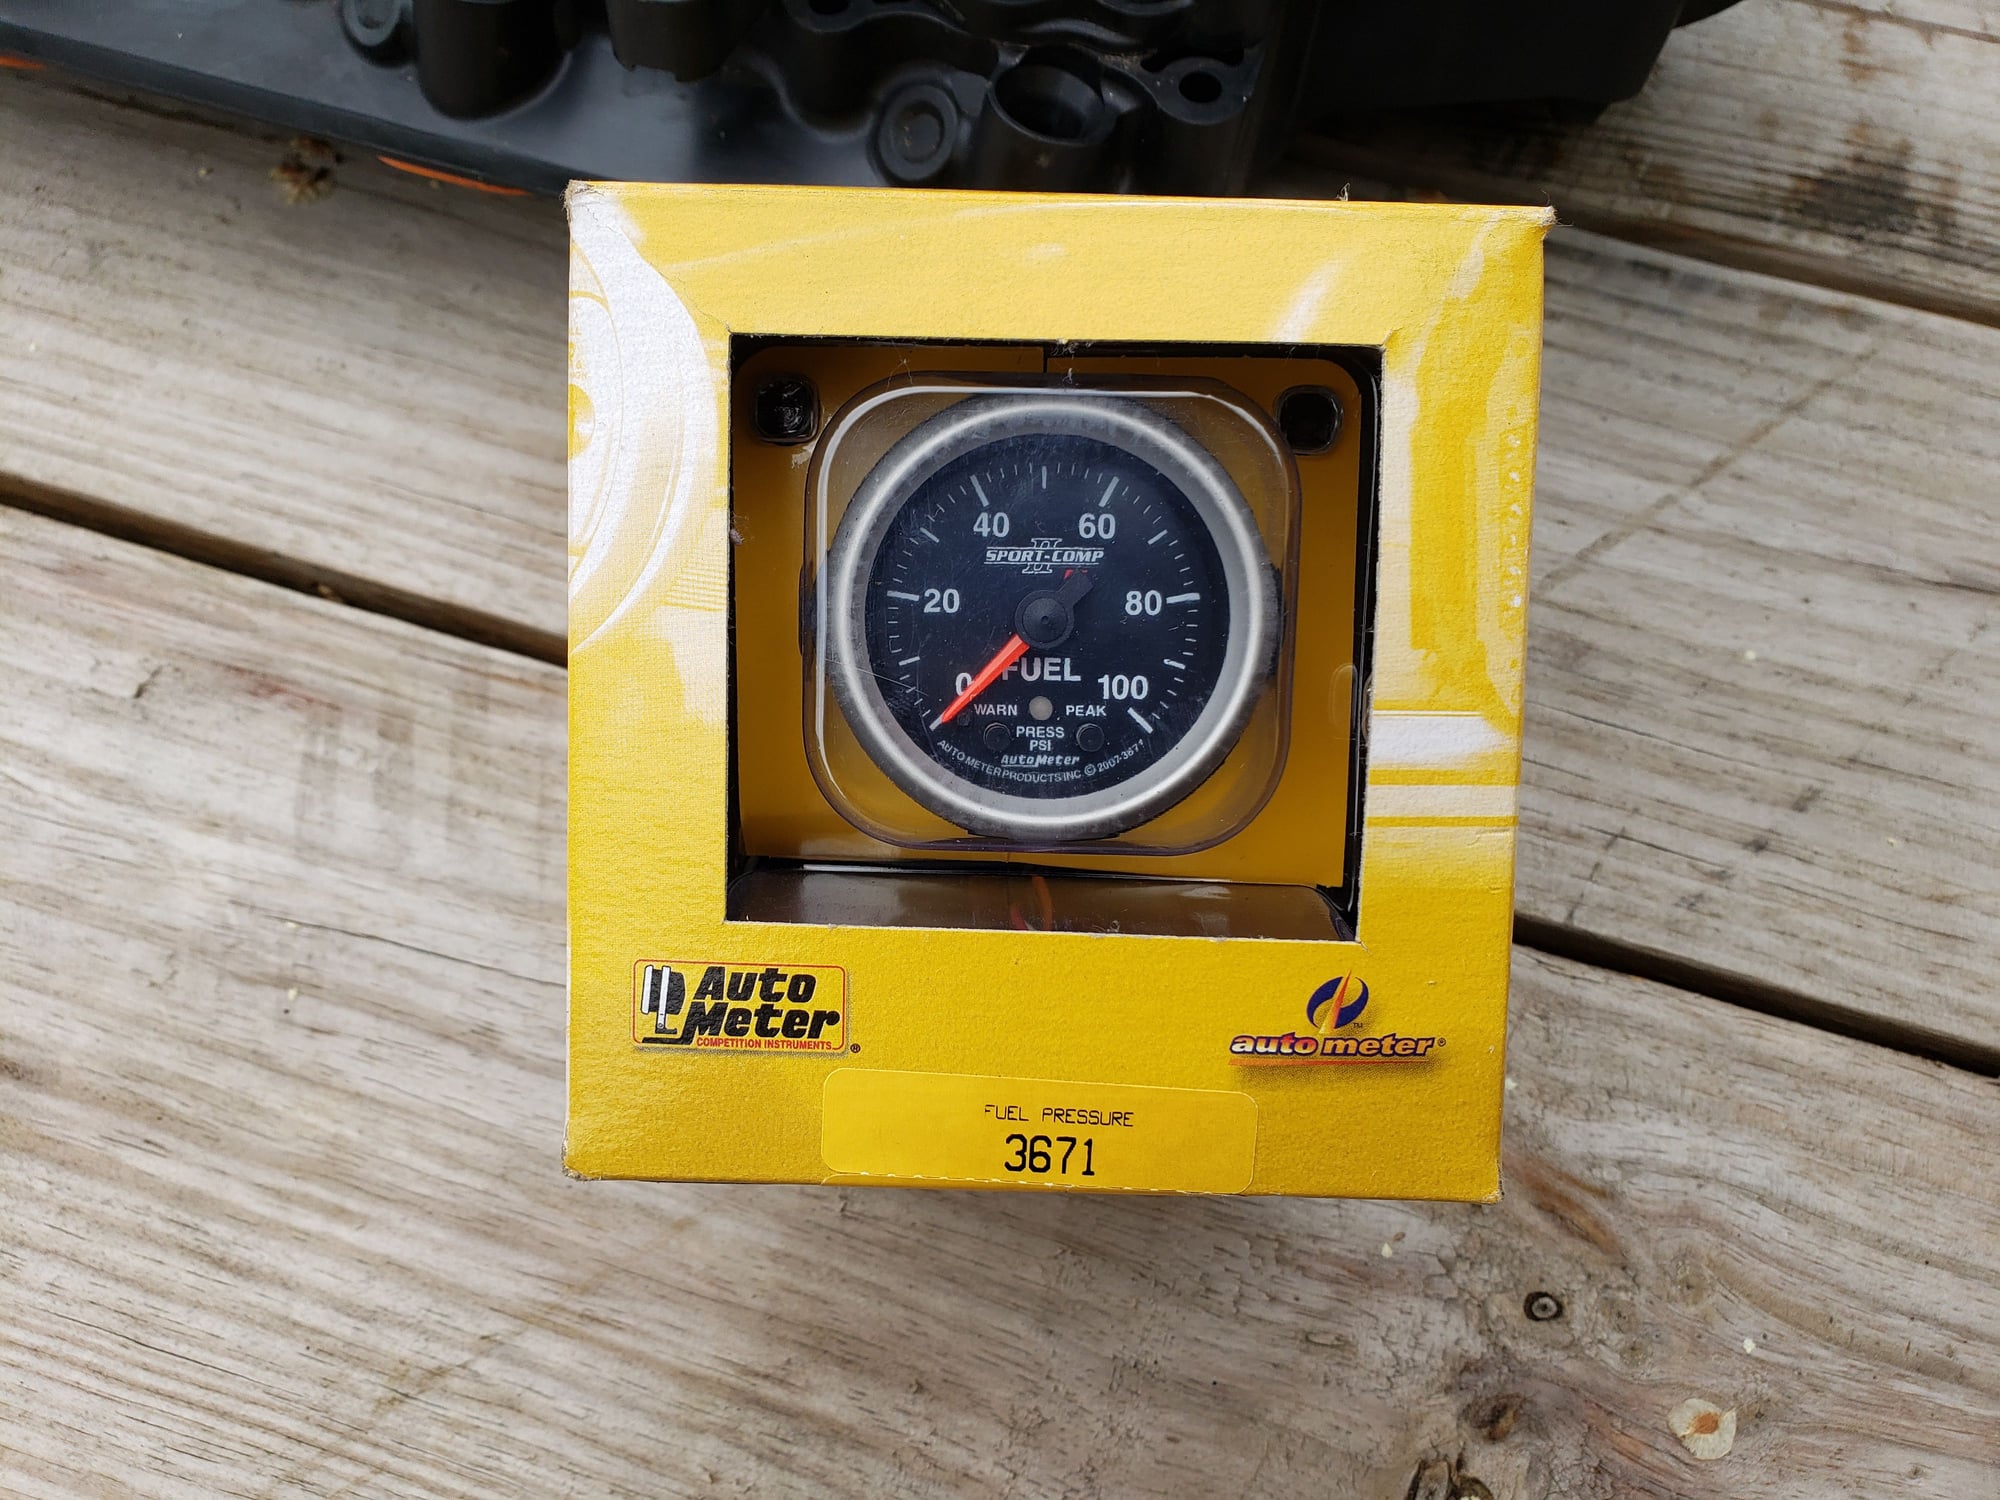  - assorted gauges/sensors - Shepherdstown, WV 25443, United States